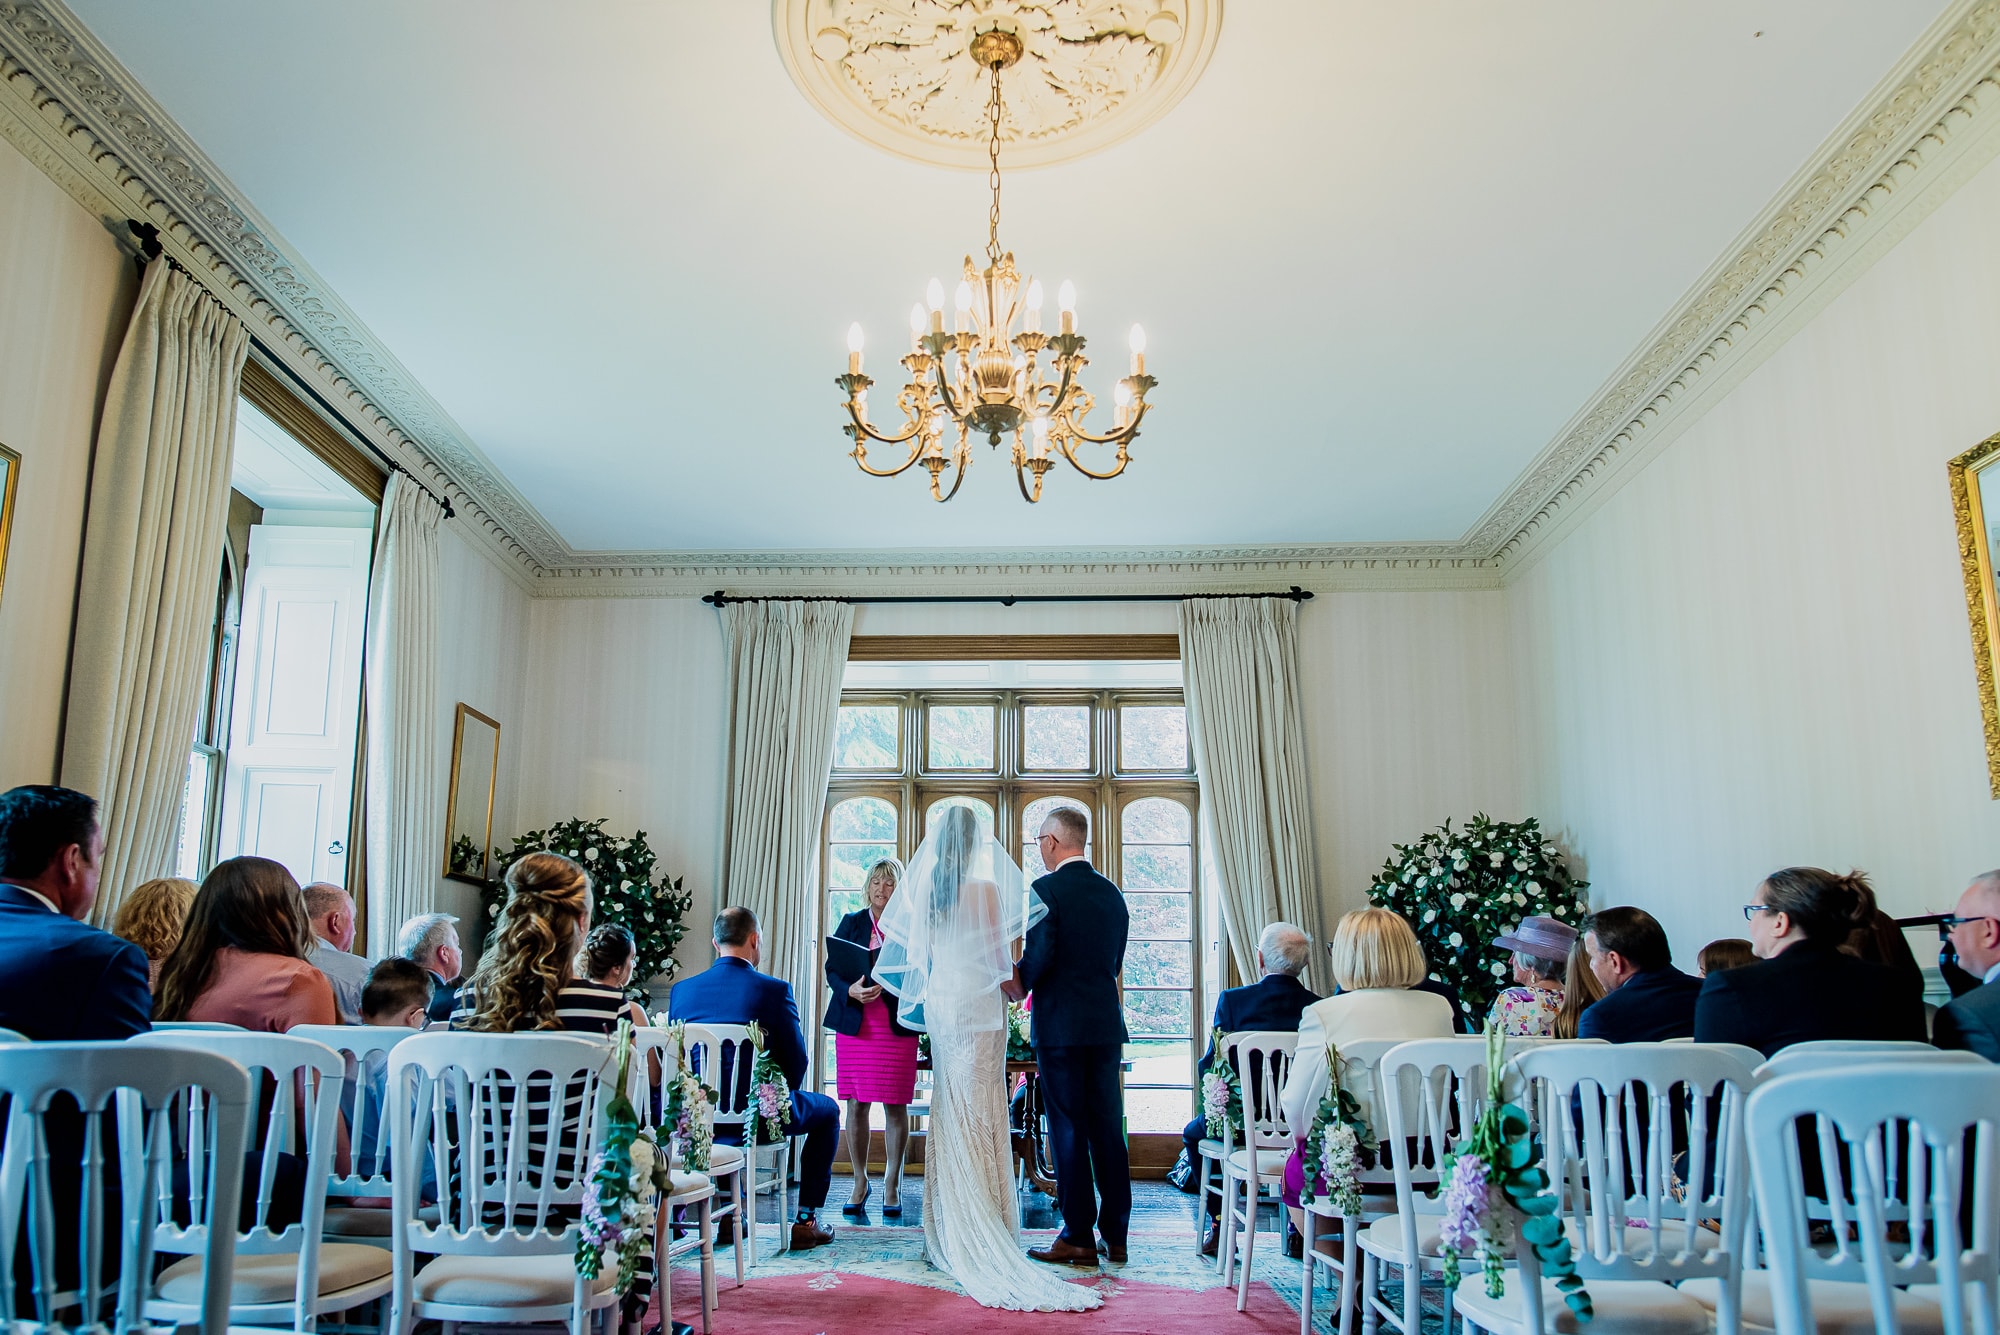 An indoor wedding ceremony at Hockwold Hall